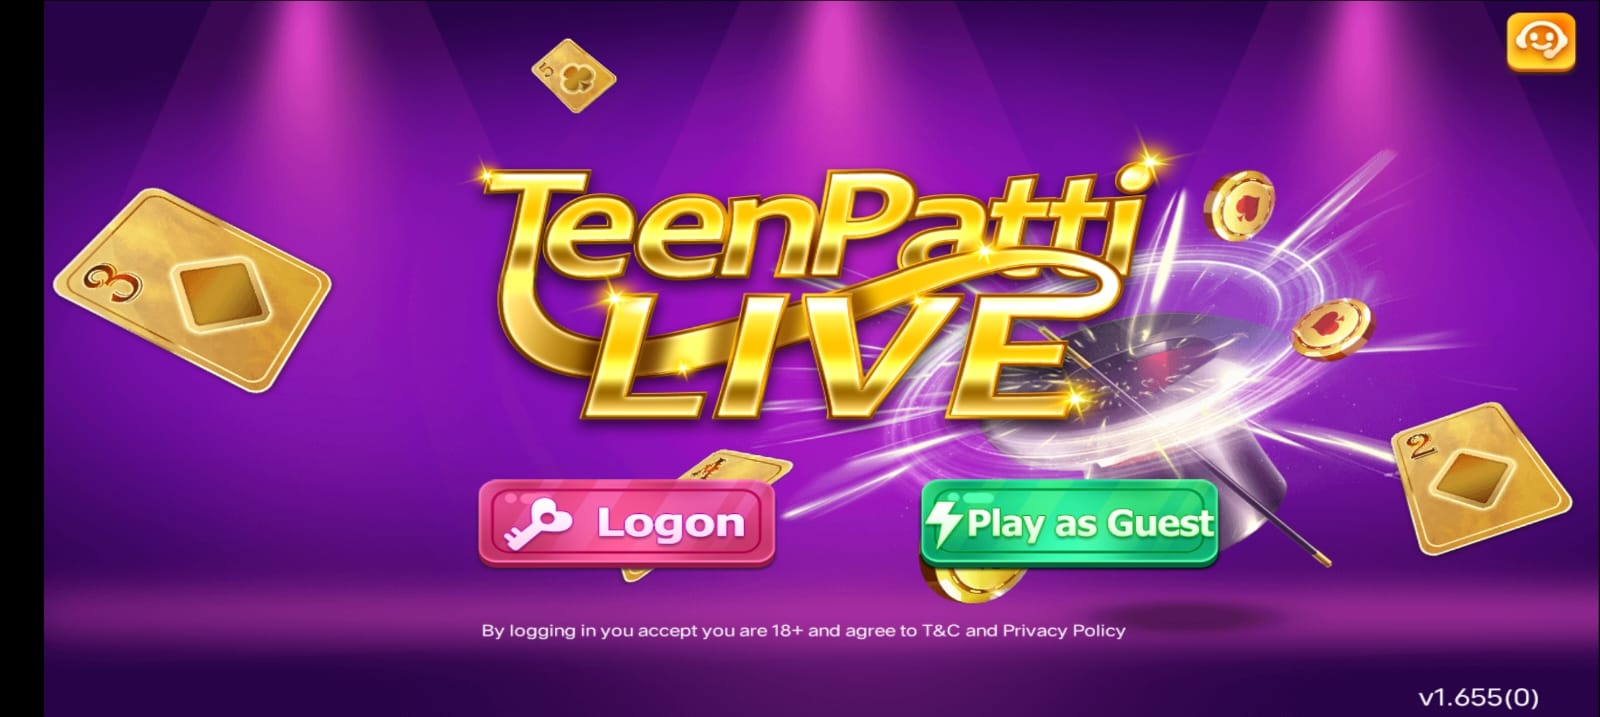 Login Process In Teen Patti Live App